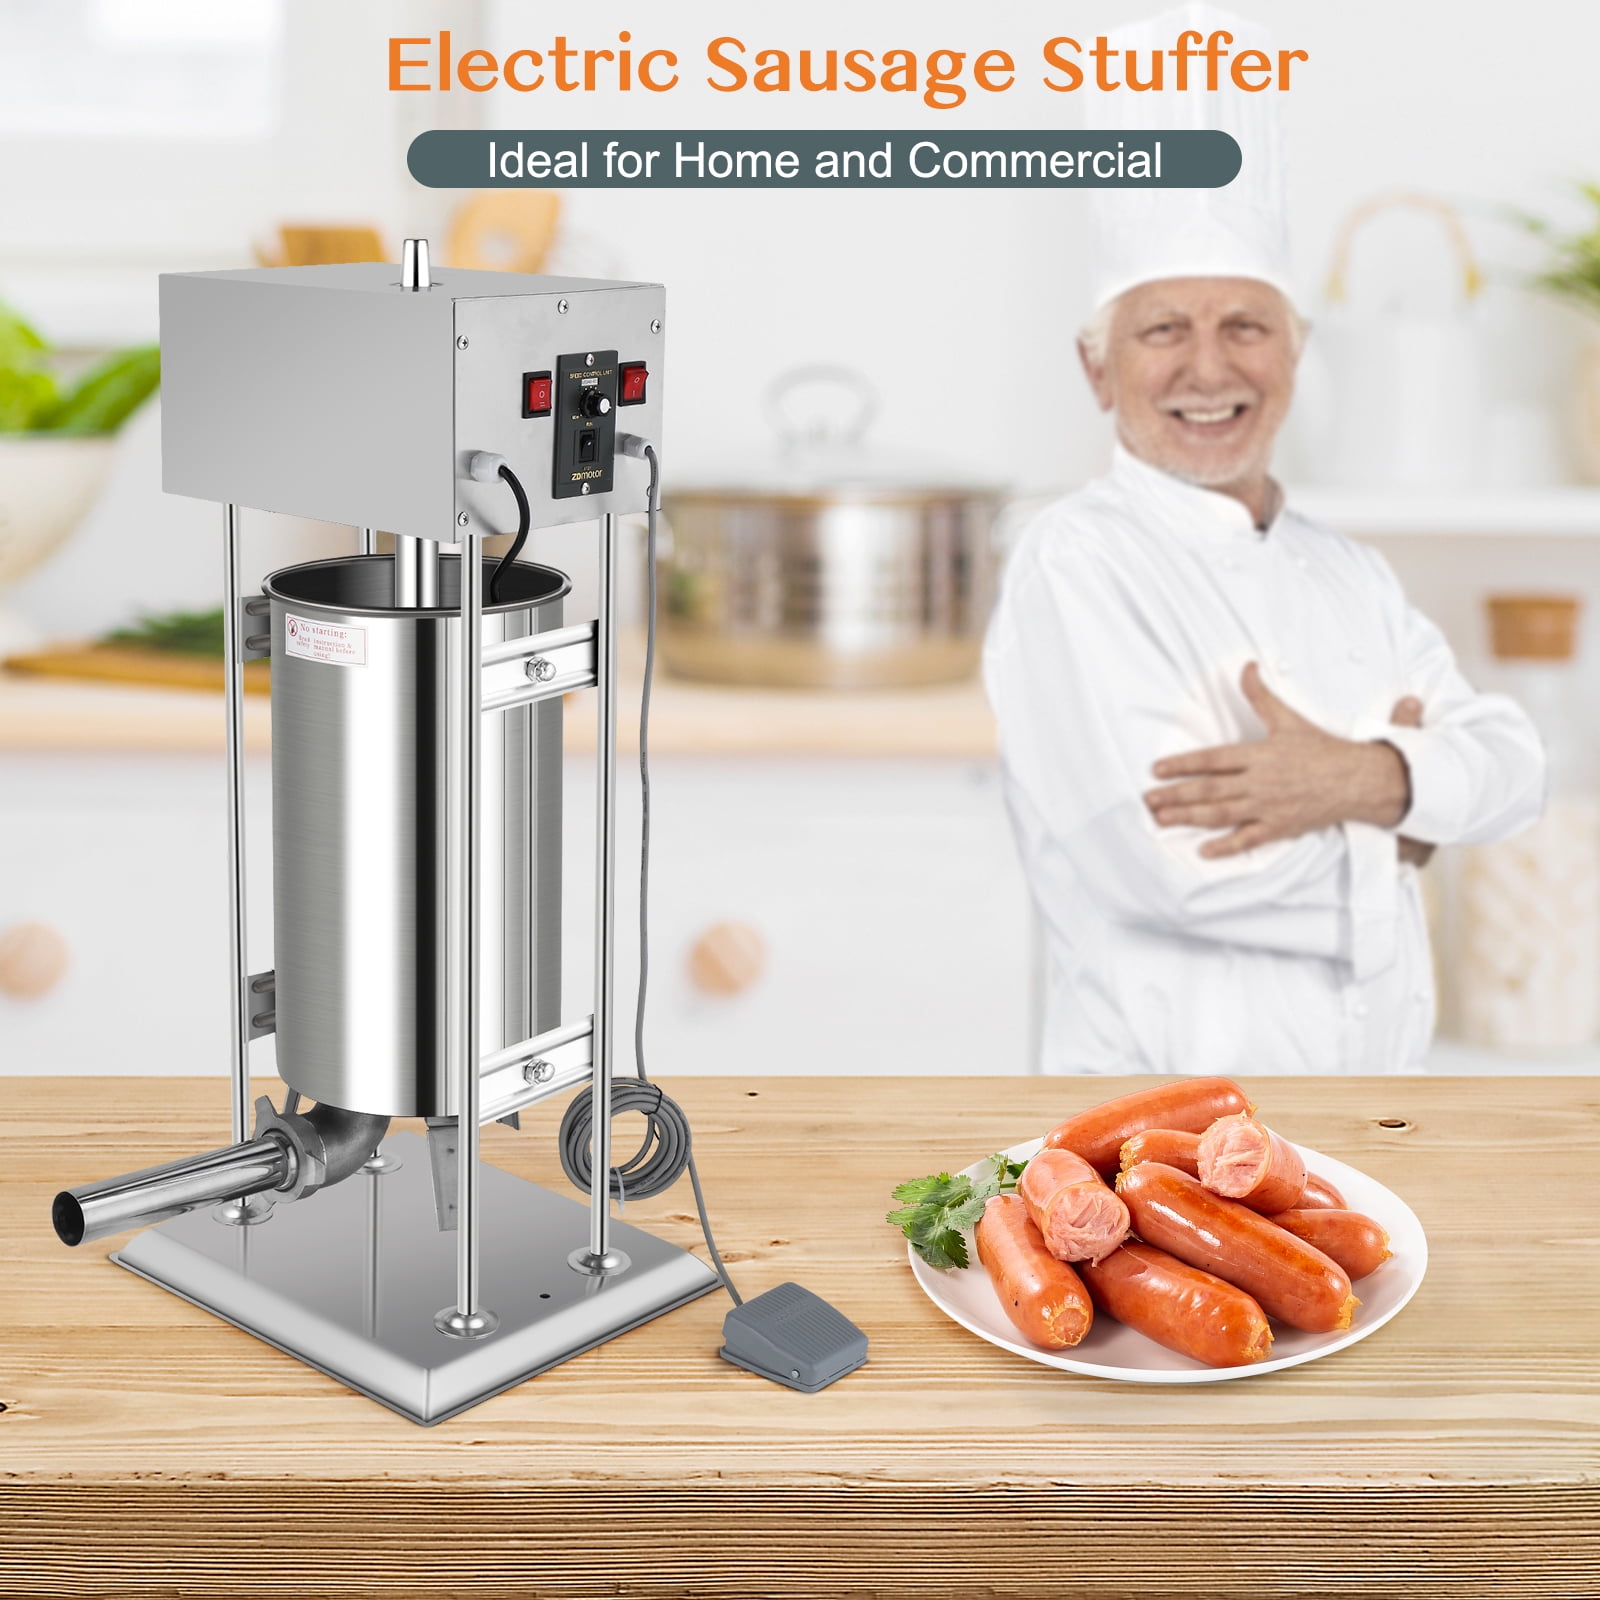 Heavy Duty Kitchen Vacuum Sealer - The Sausage Maker